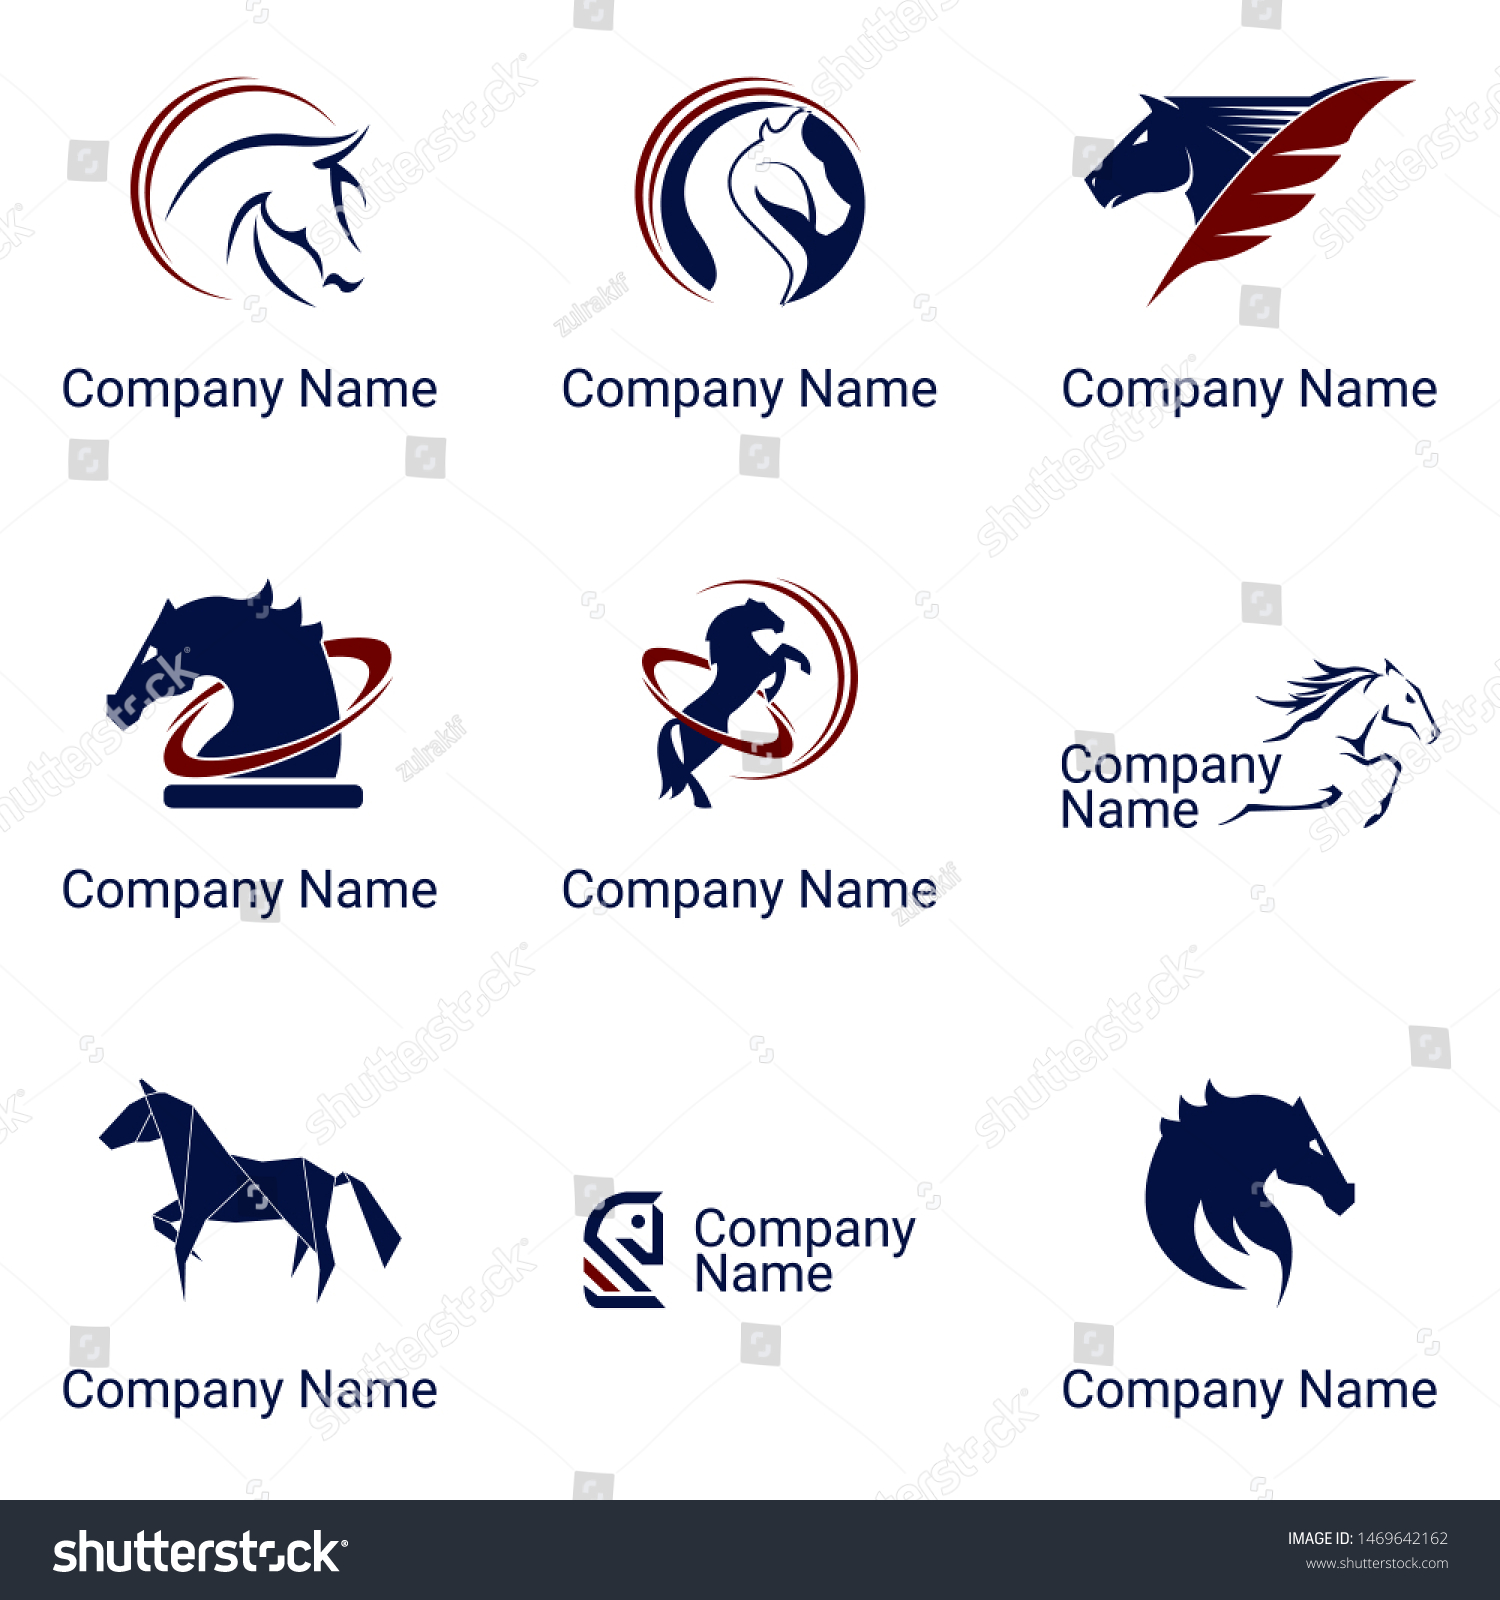 25,447 Horse racing logo Images, Stock Photos & Vectors | Shutterstock